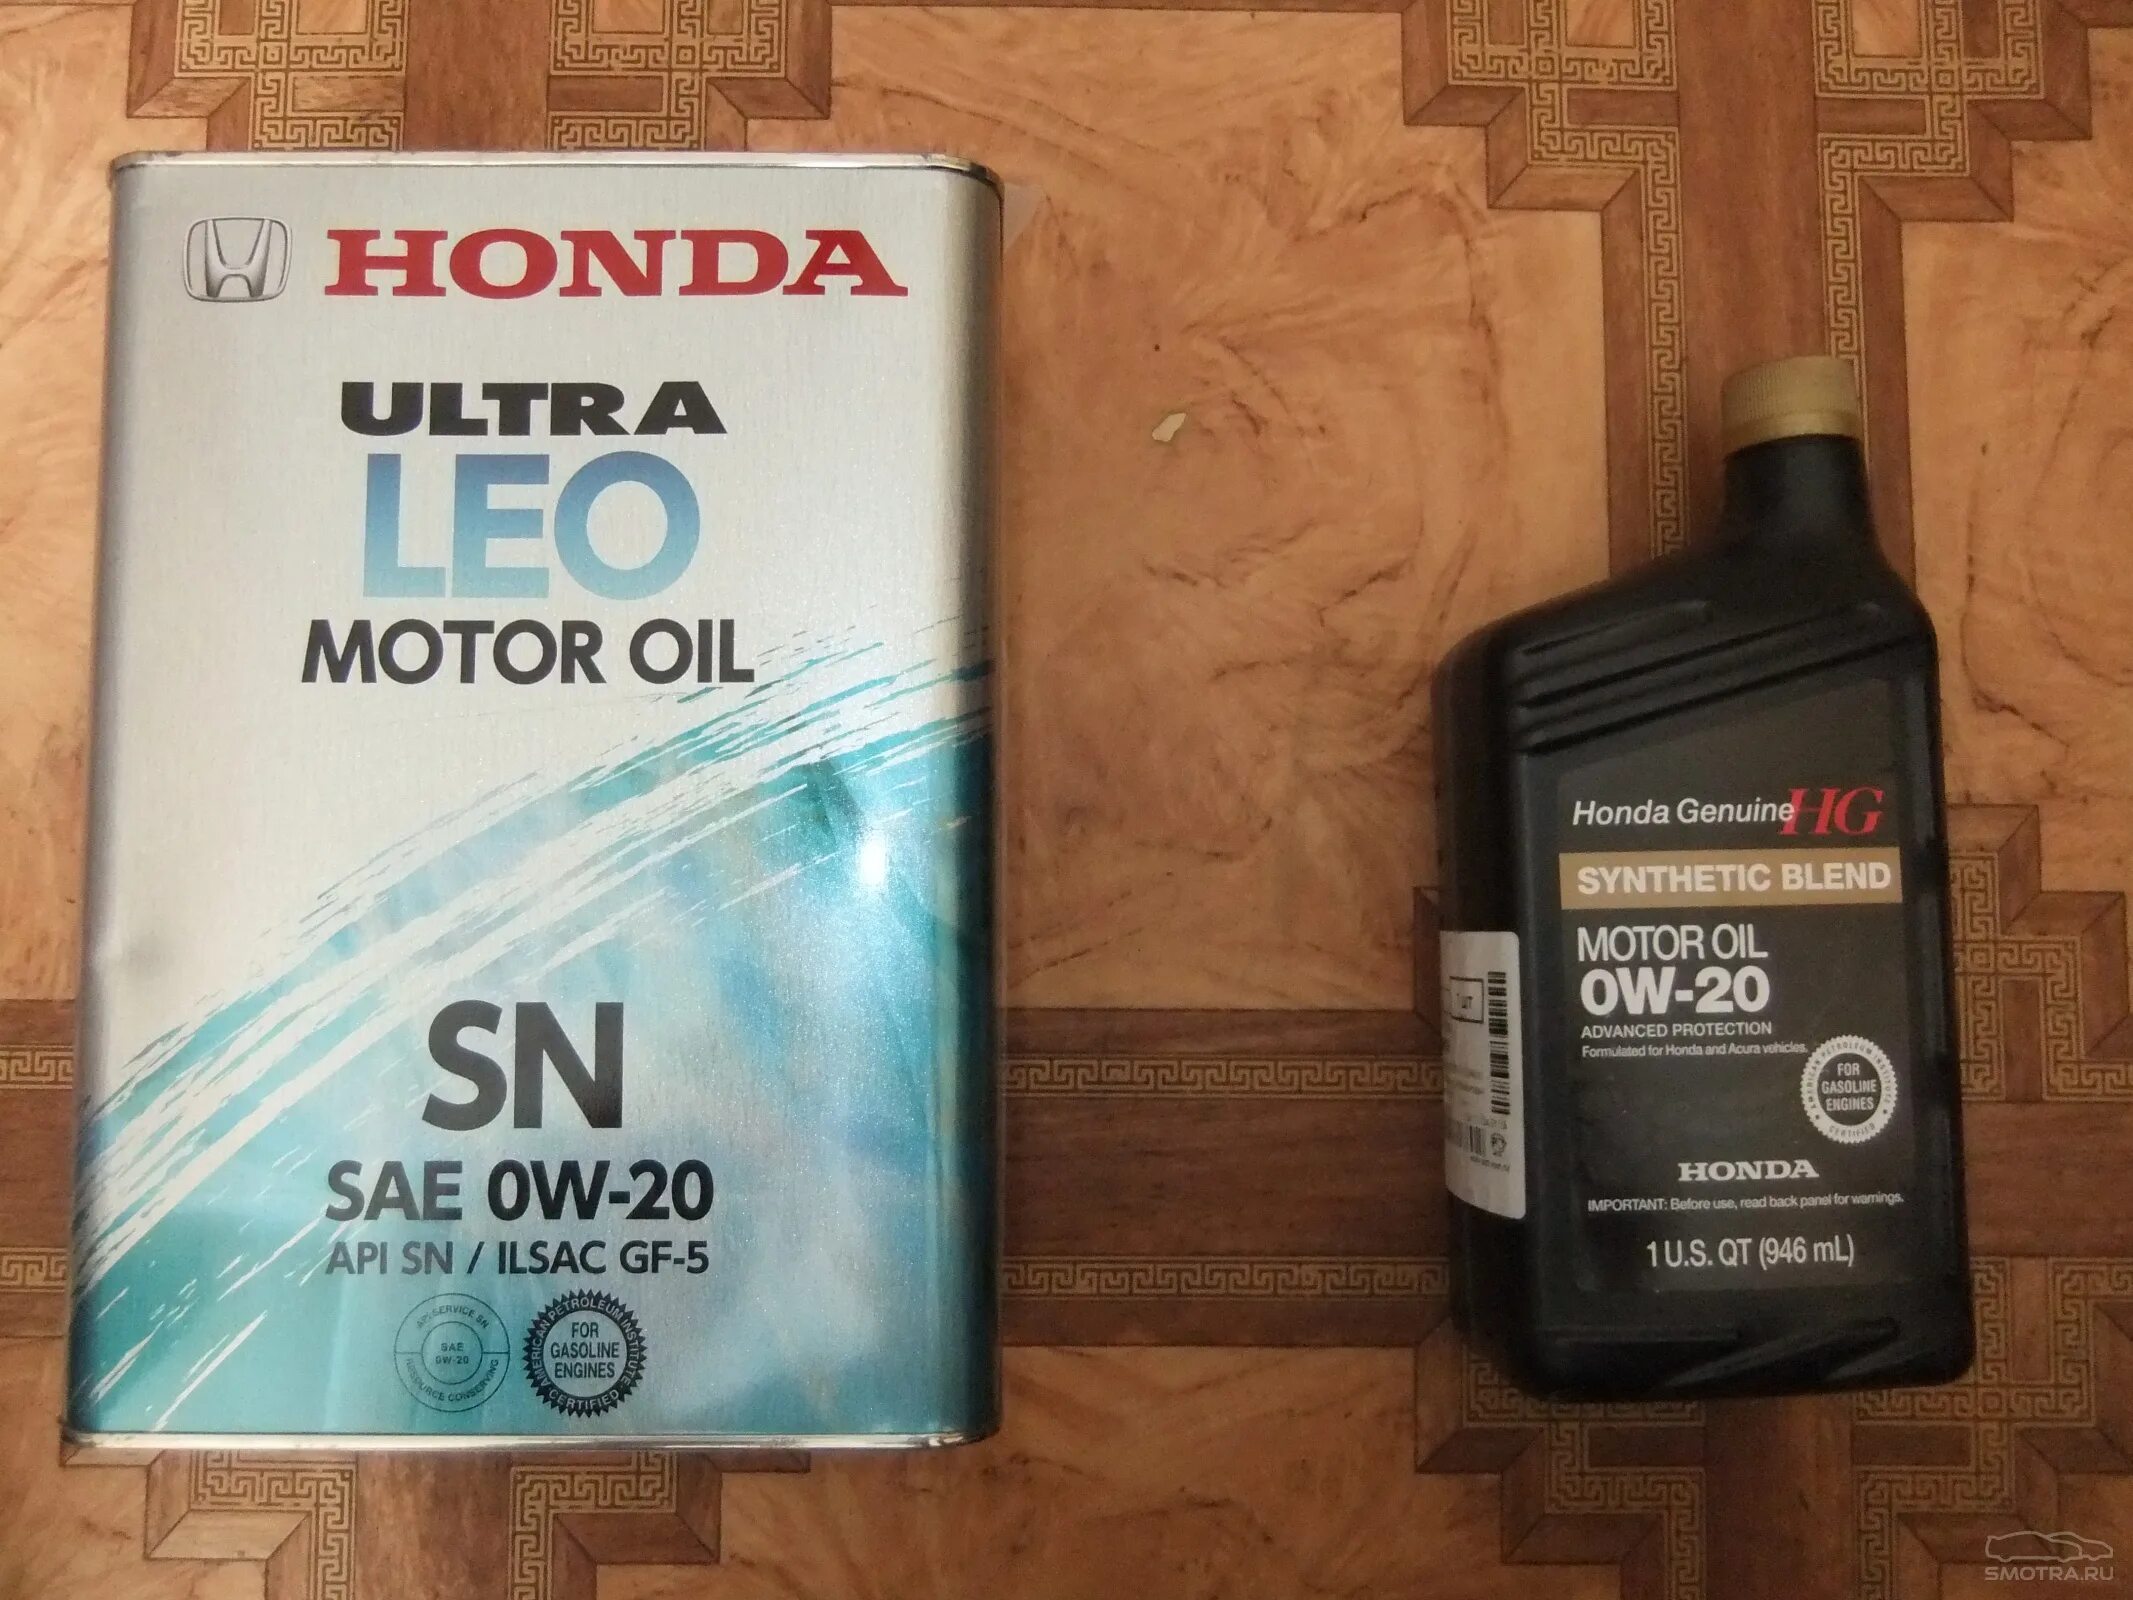 Масло хонда срв 1. Оригинальное масло Хонда 0w20. Моторное масло Honda CR-V 2013. Honda CR-V 2.0 мотор масла. Honda Synthetic Blend 5w30.